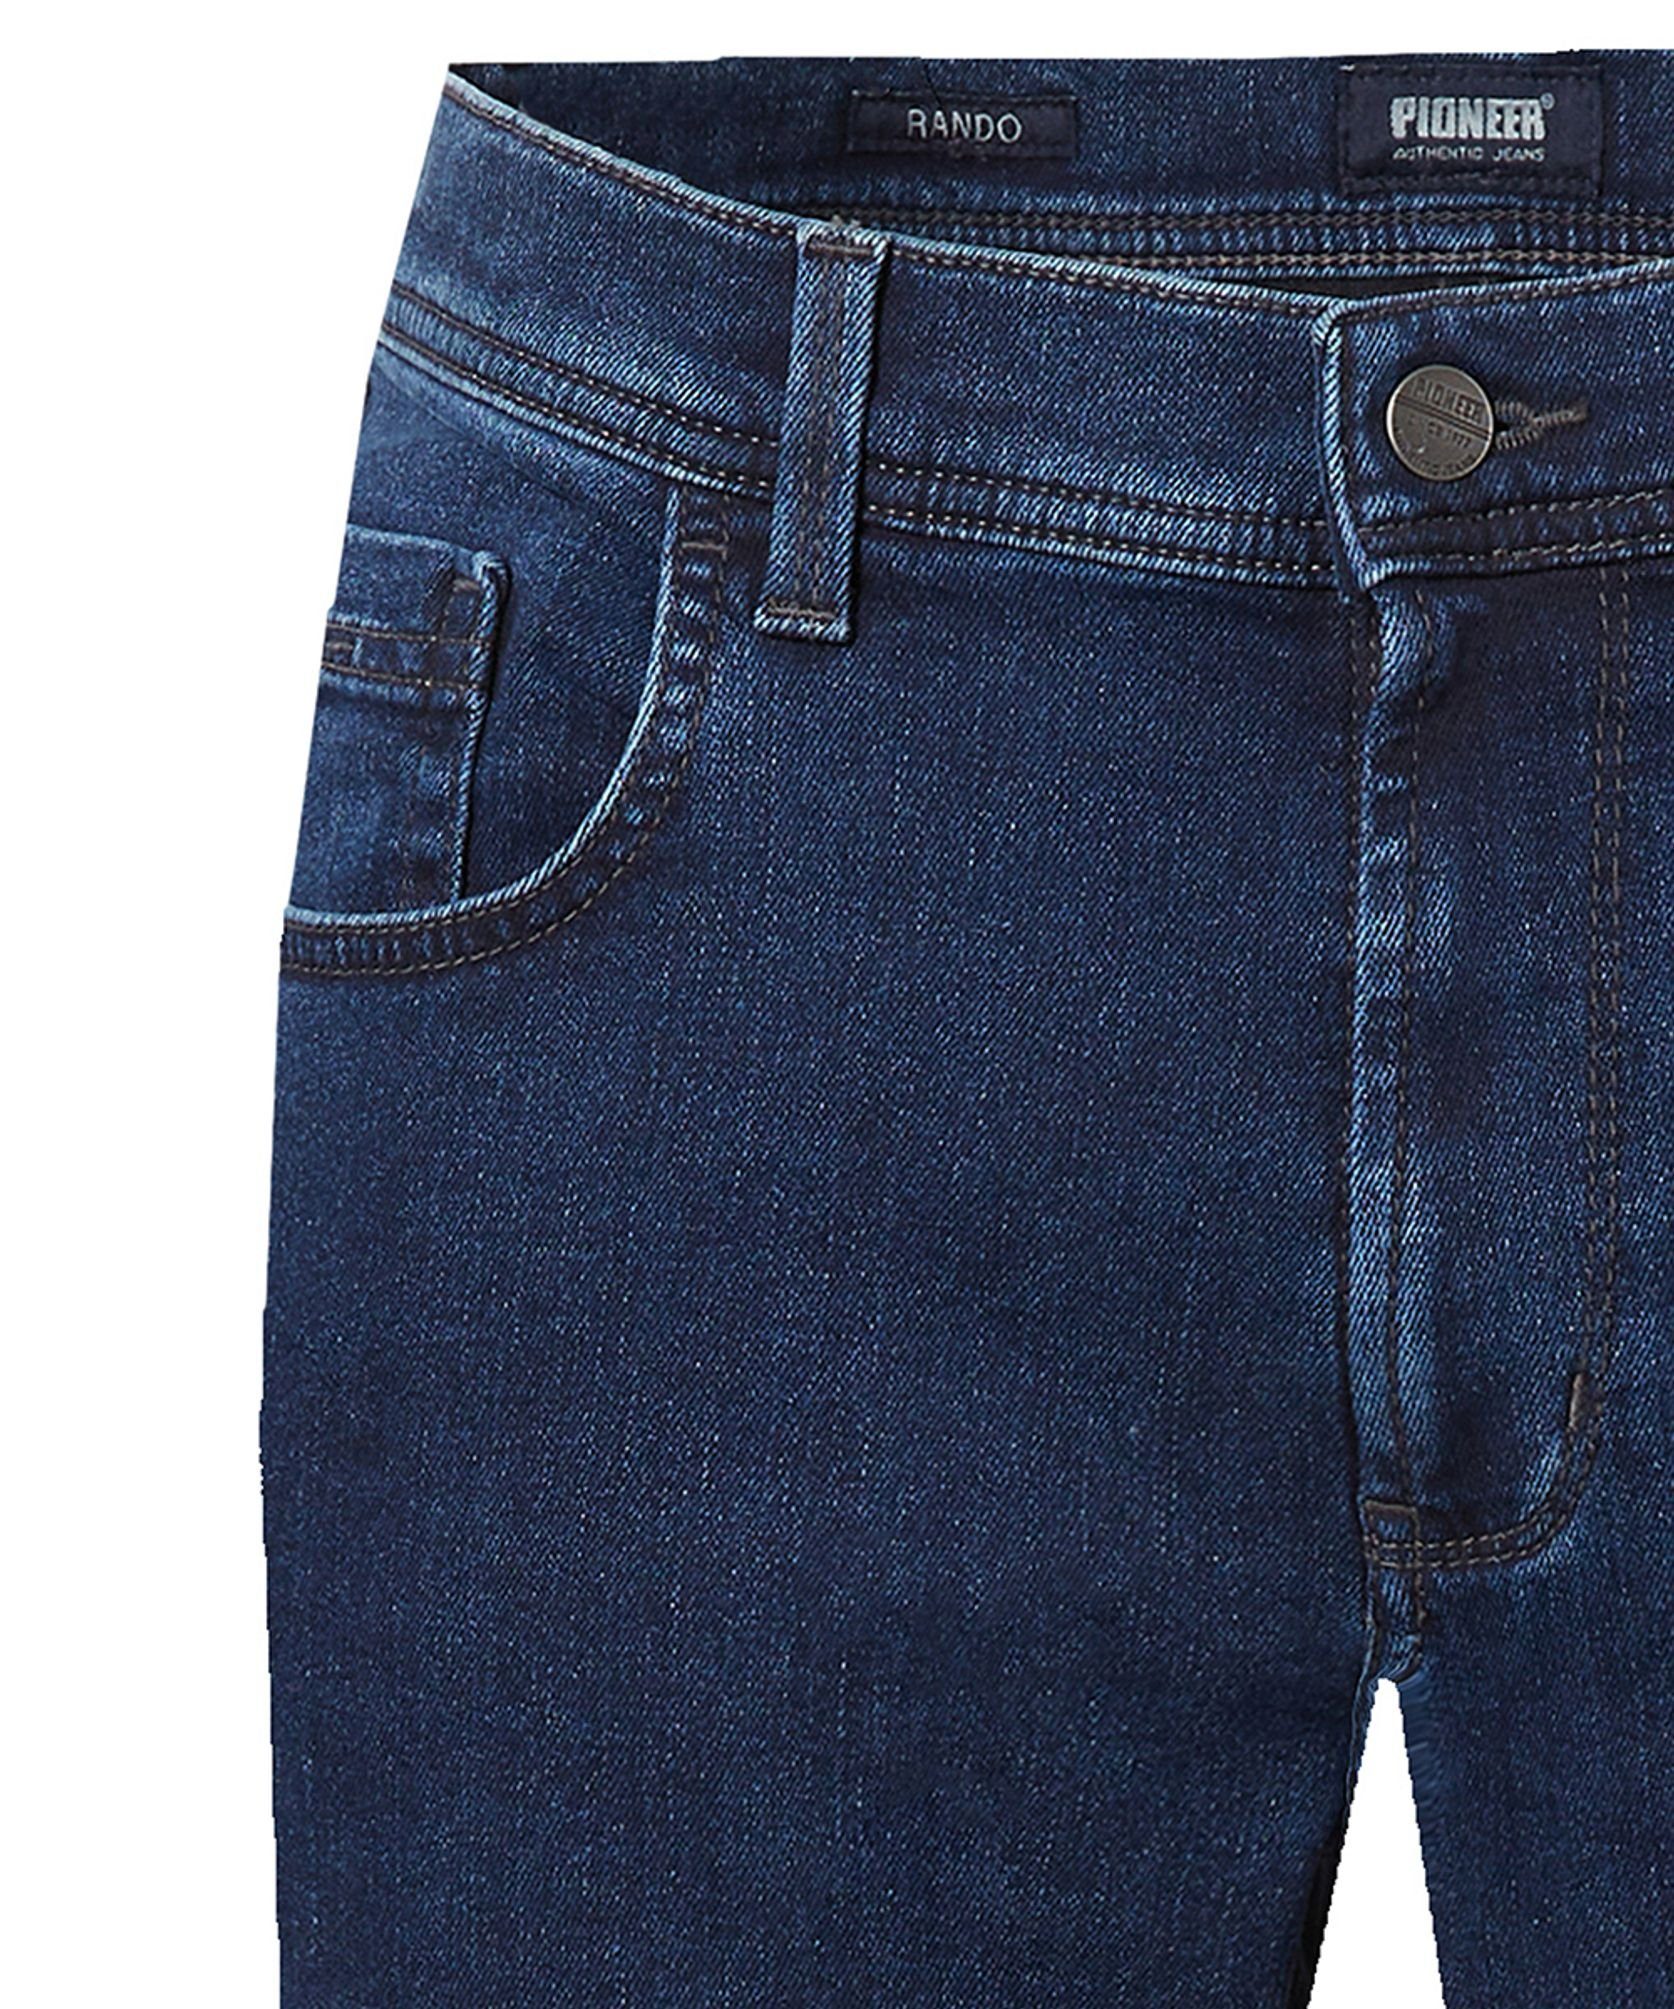 Authentic 5-Pocket-Jeans dark blue Stretch stonewash Jeans 16801.06624 P0 Pioneer